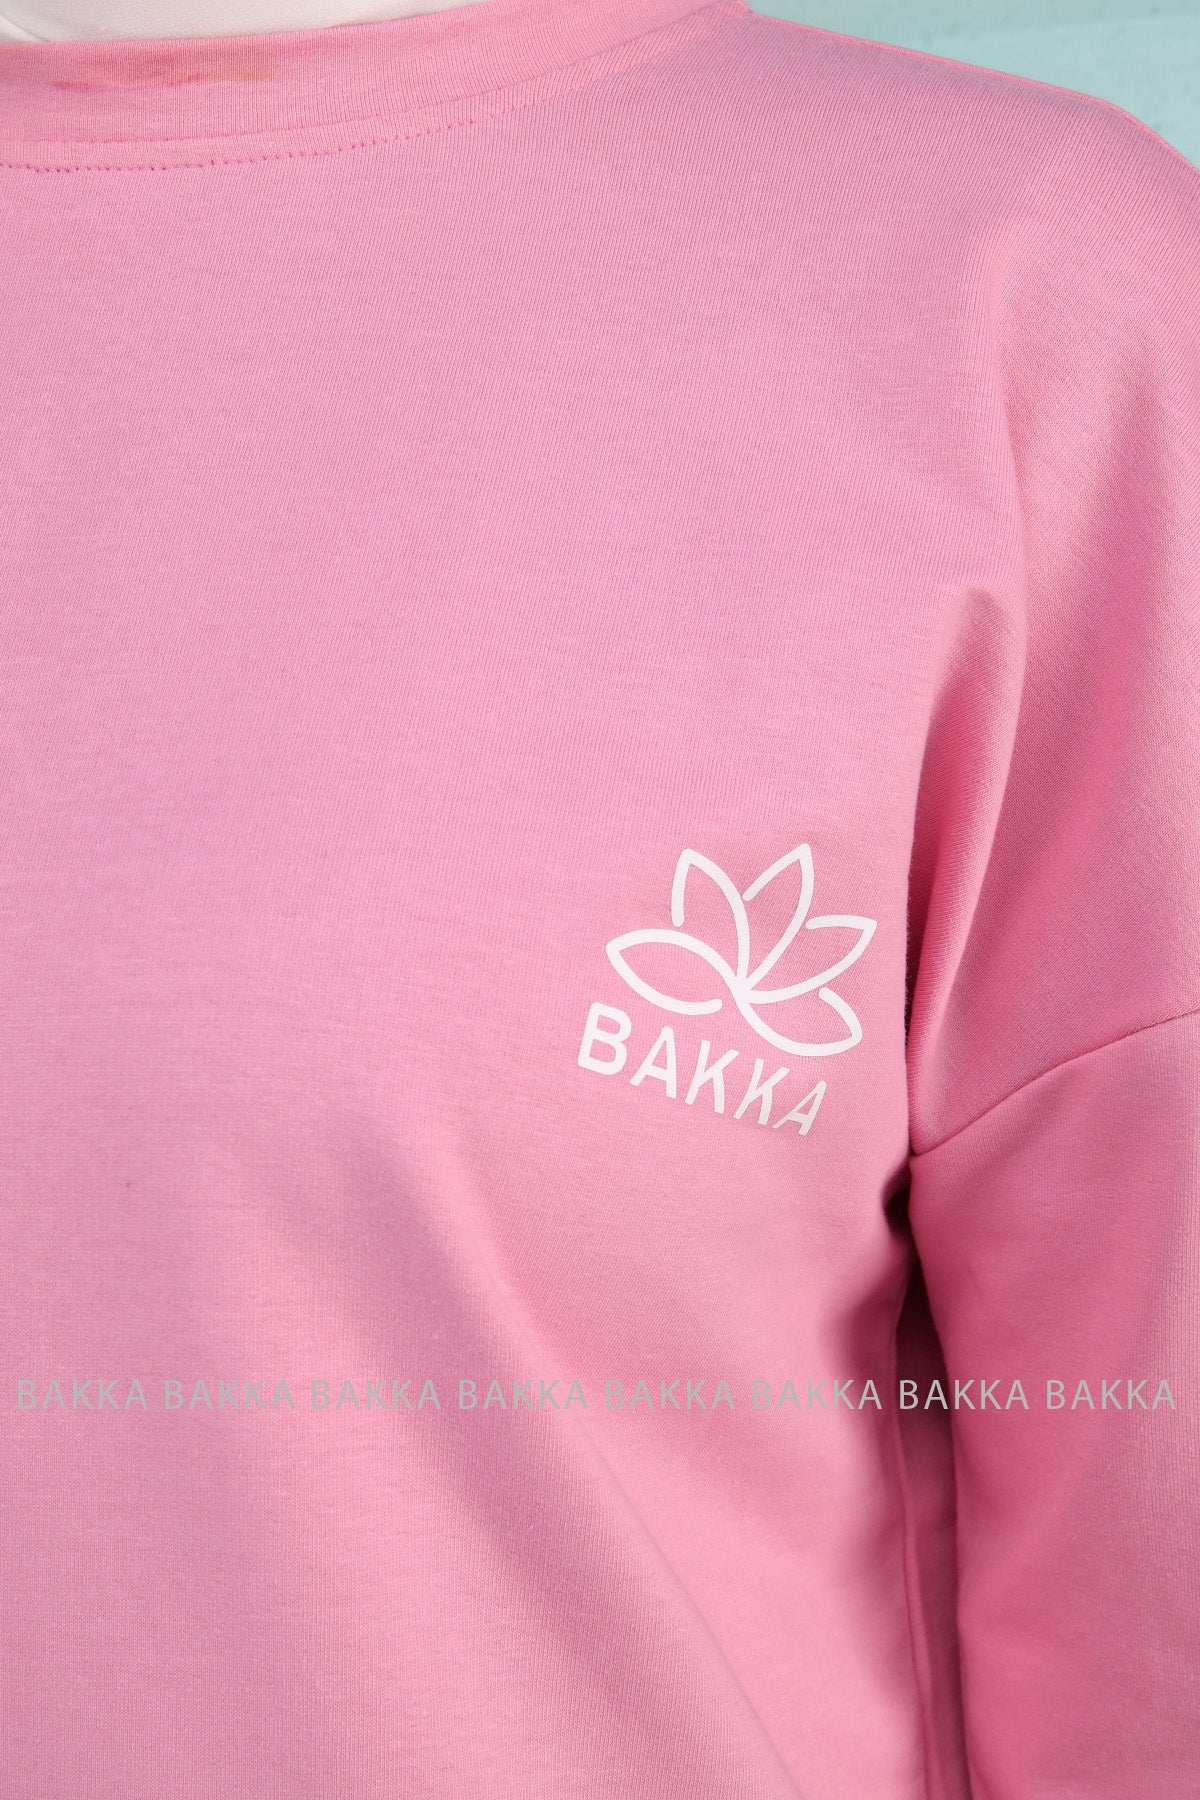 Blouse - Logo - Pink - bakkaclothing